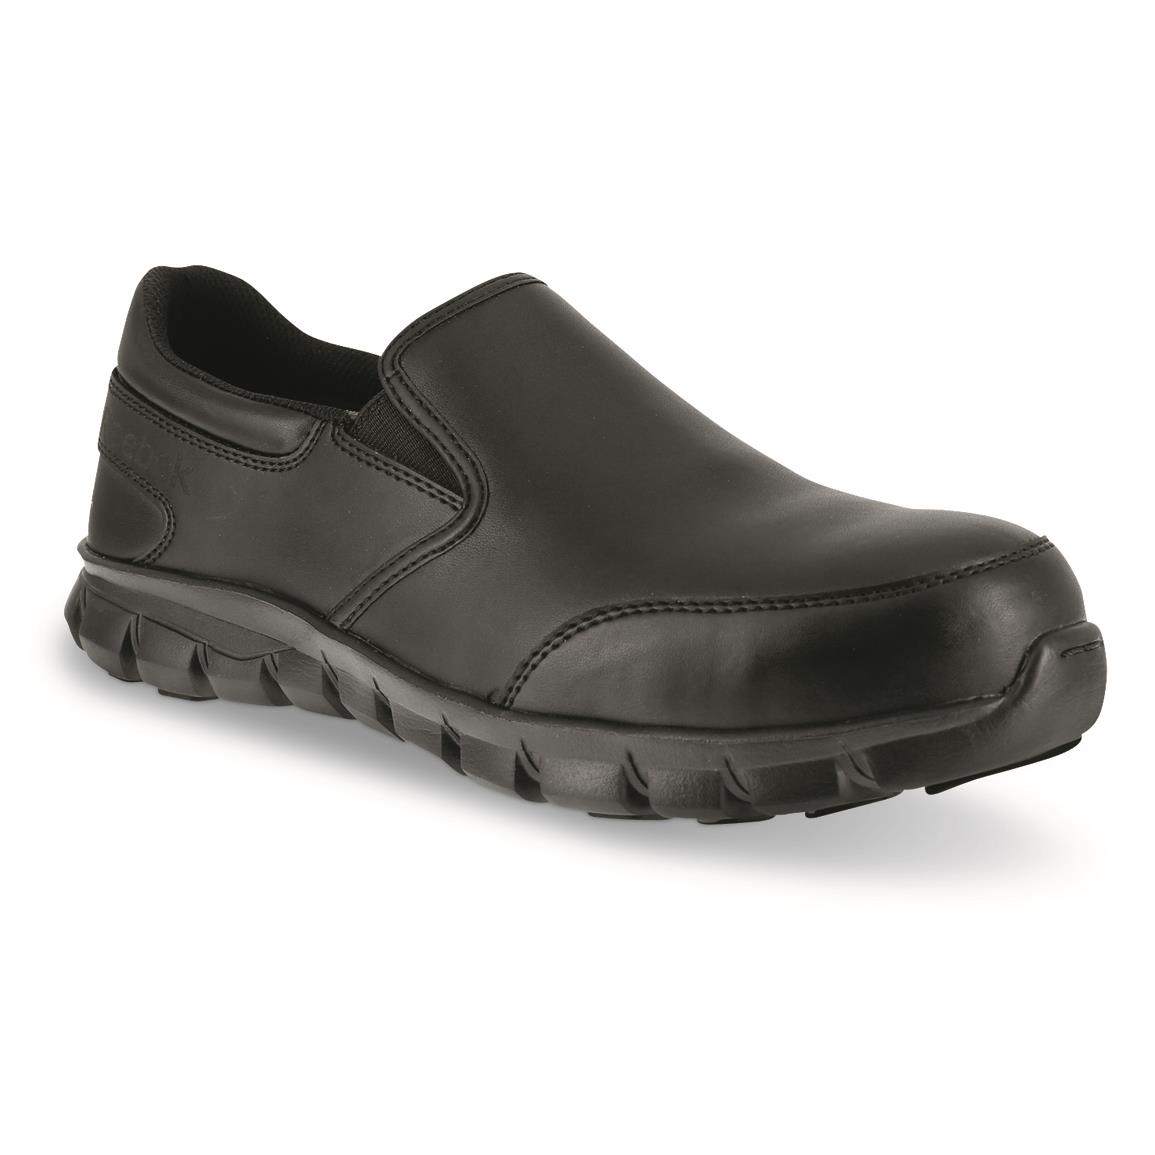 Reebok Men's Sublite Cushion Work Composite Toe Slip-on Shoes, Black